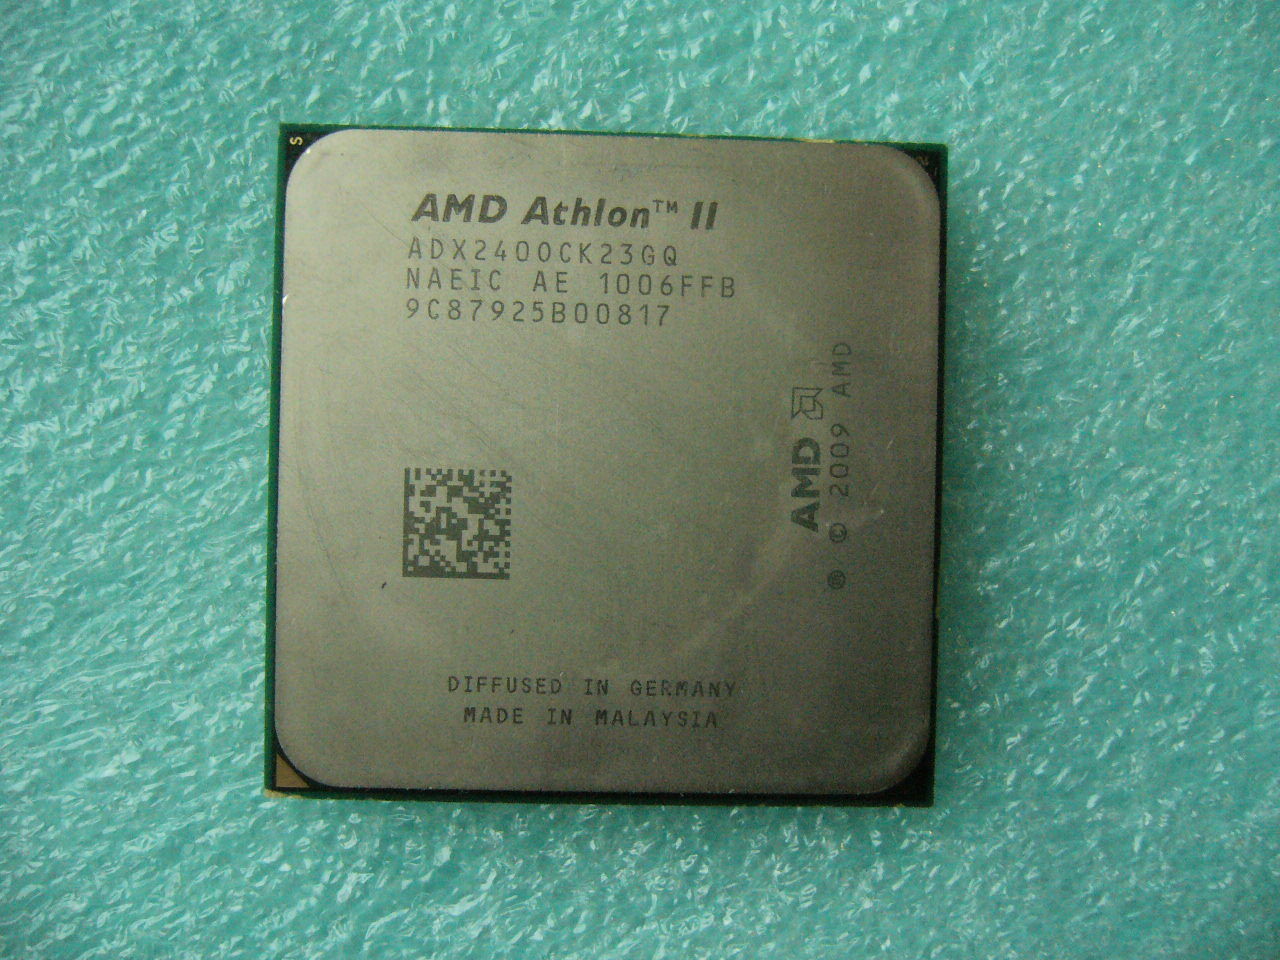 QTY 1x AMD Athlon II X2 240 2.8 GHz Dual-Core (ADX240OCK23GQ) CPU Socket AM3